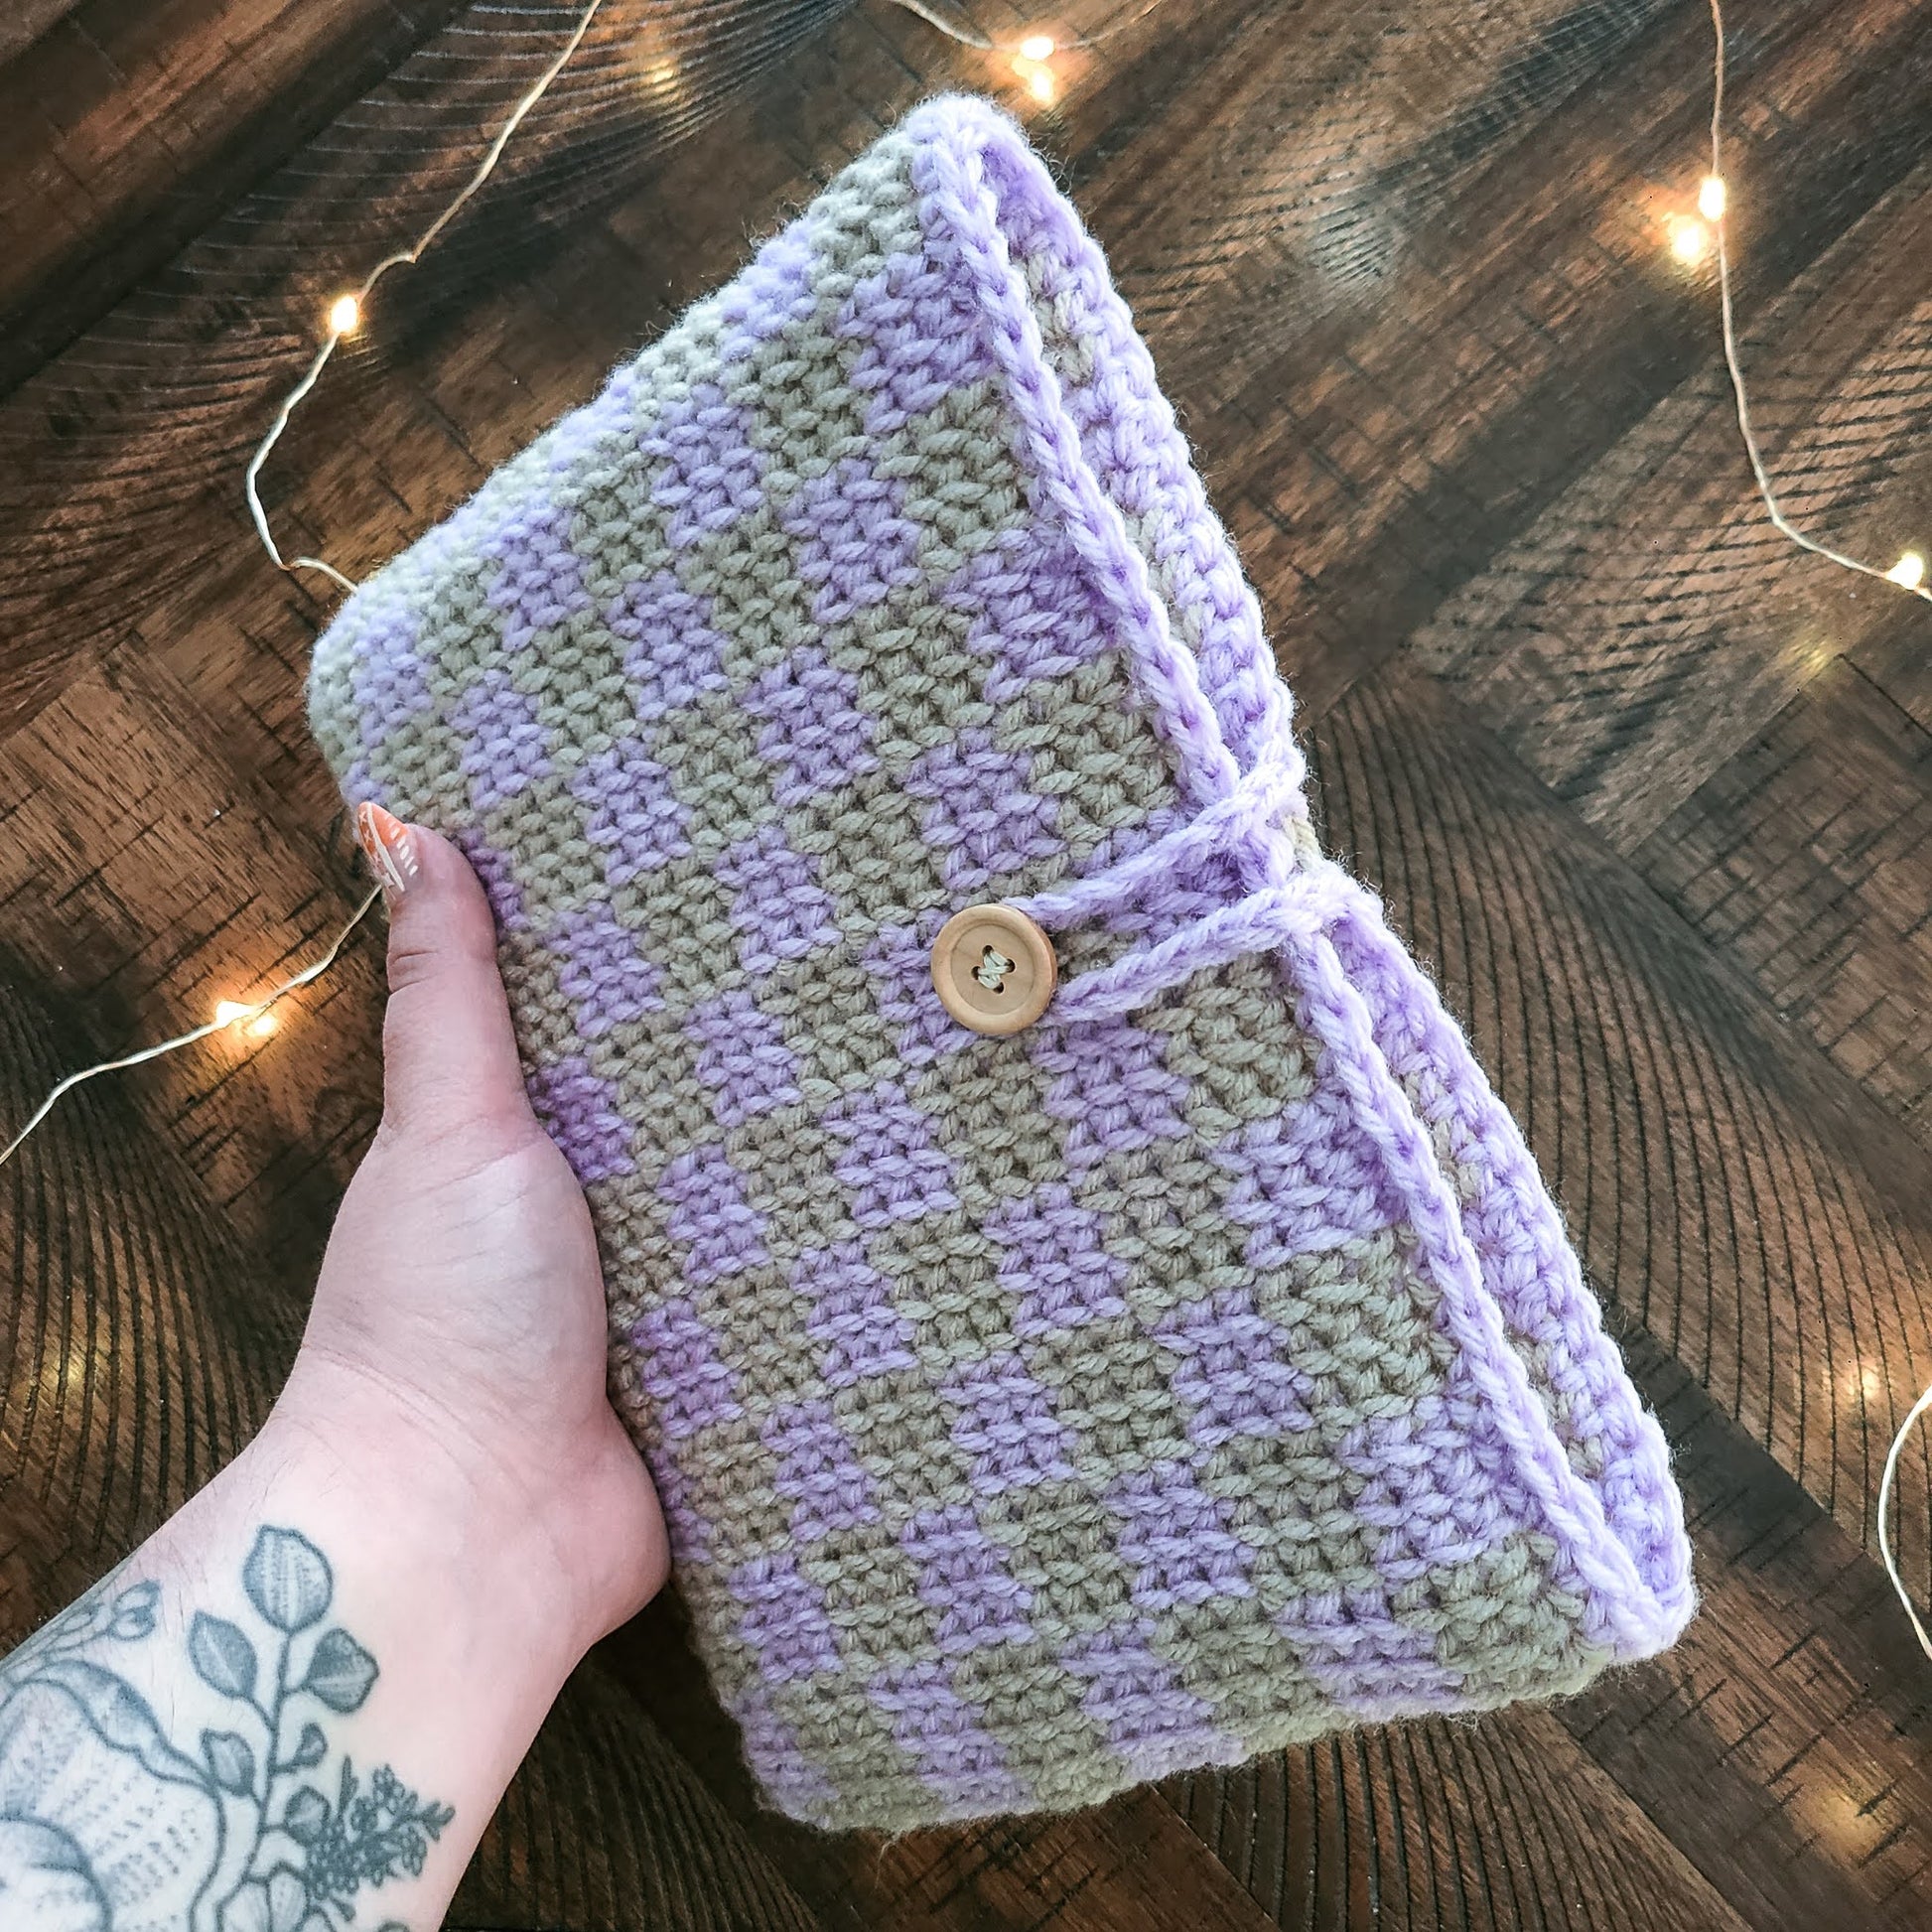 I definitely needed a crochet book sleeve in my life! #crochet